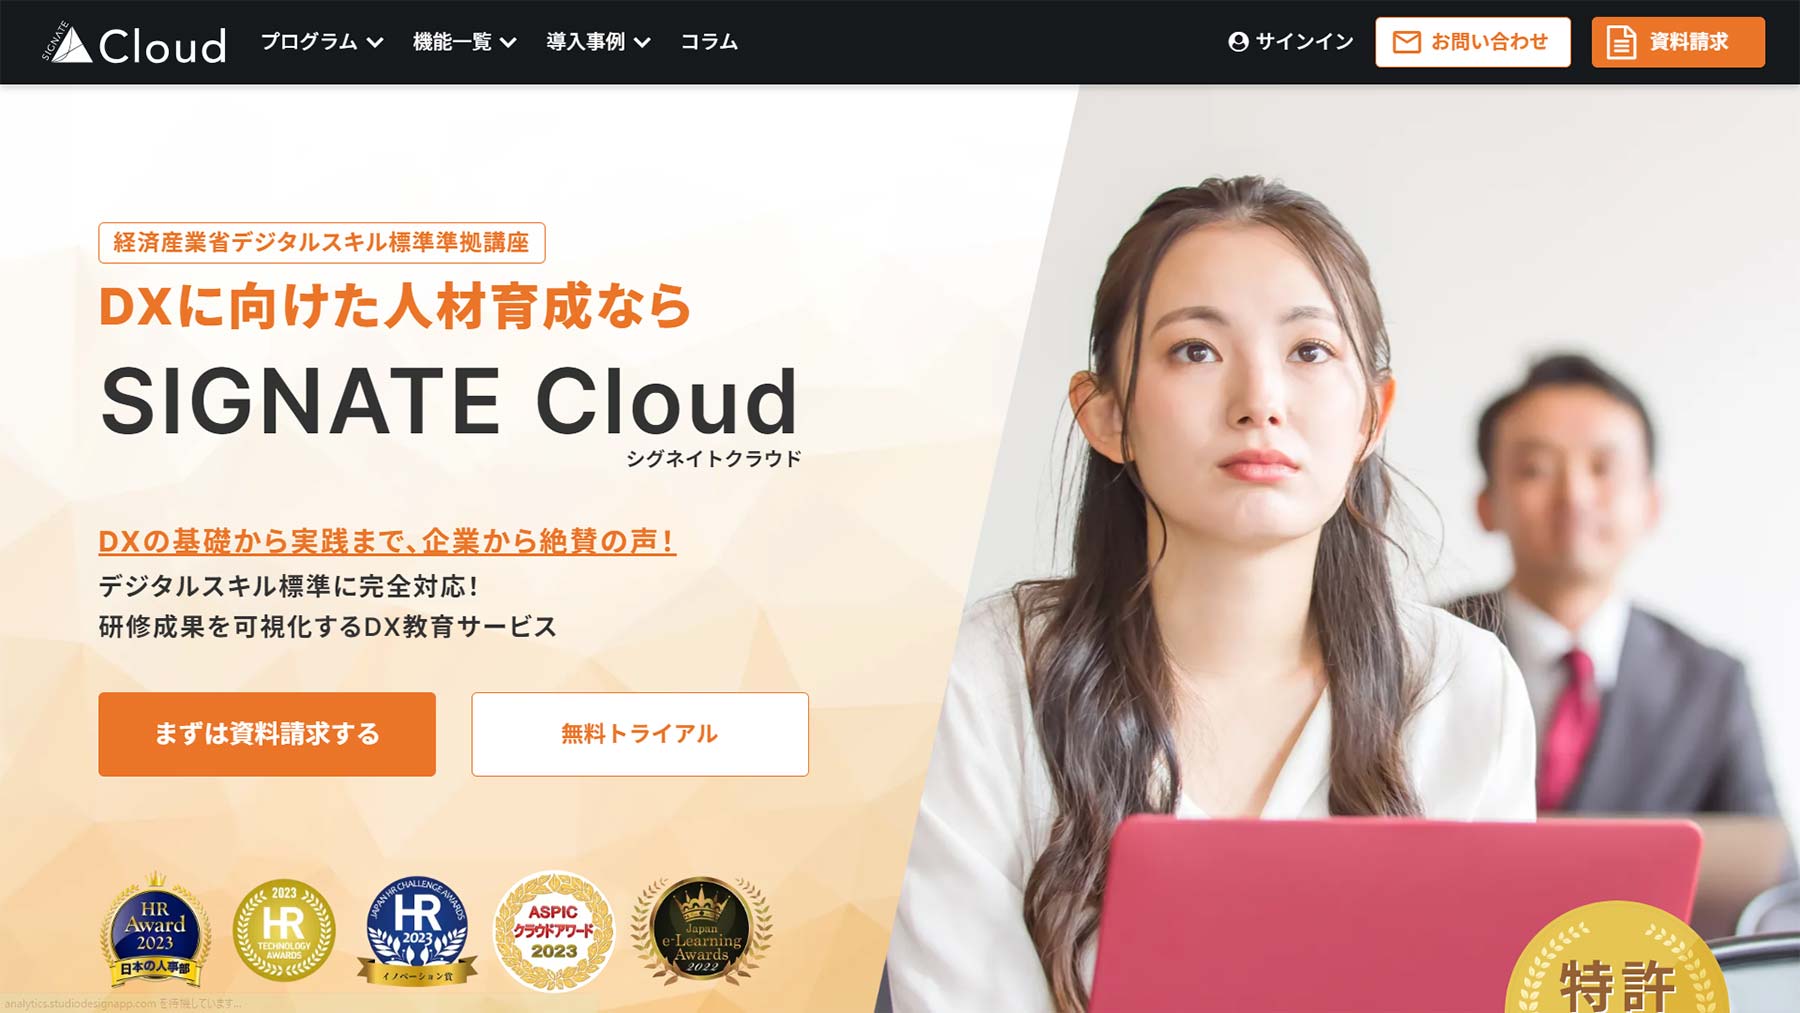 SIGNATE Cloud公式Webサイト